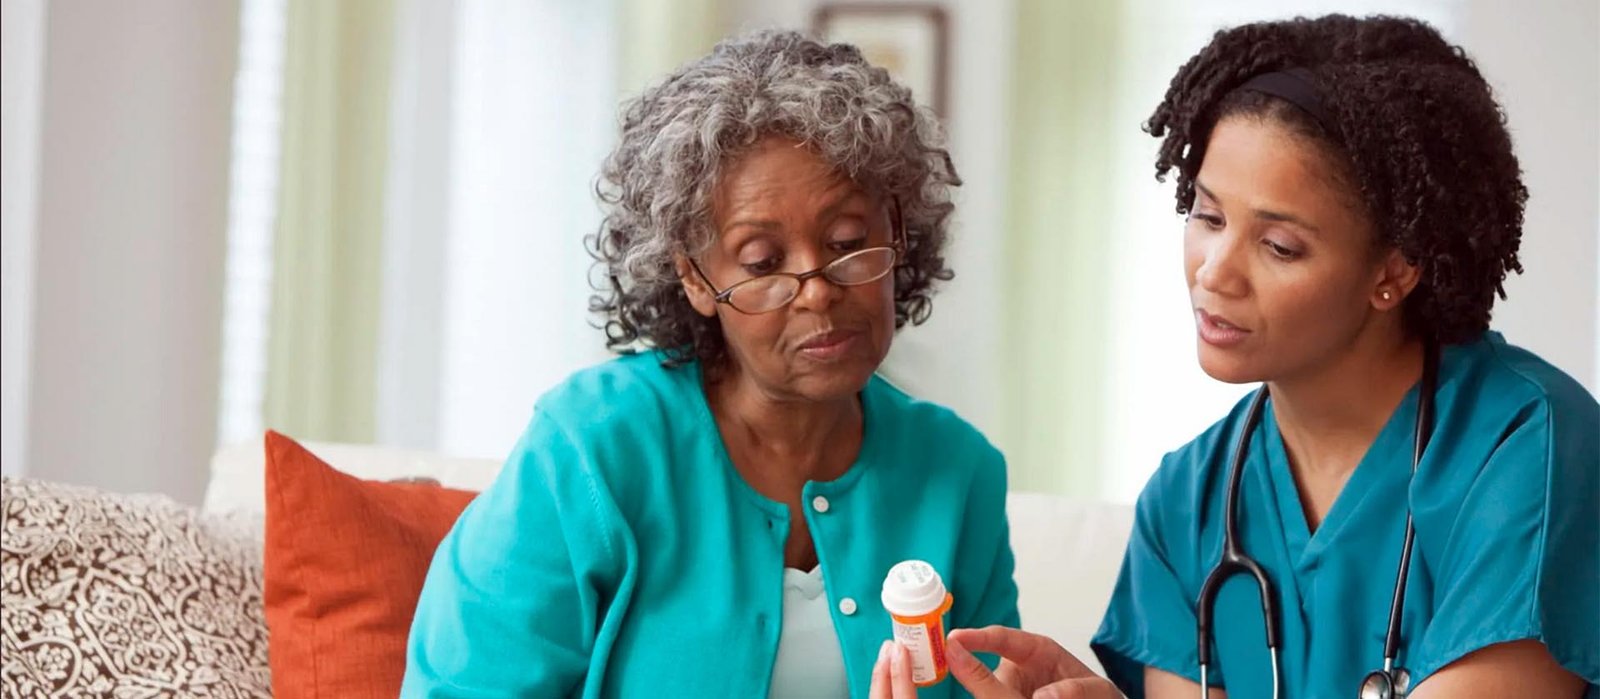 Nurse helps monitor the proper prescription medications